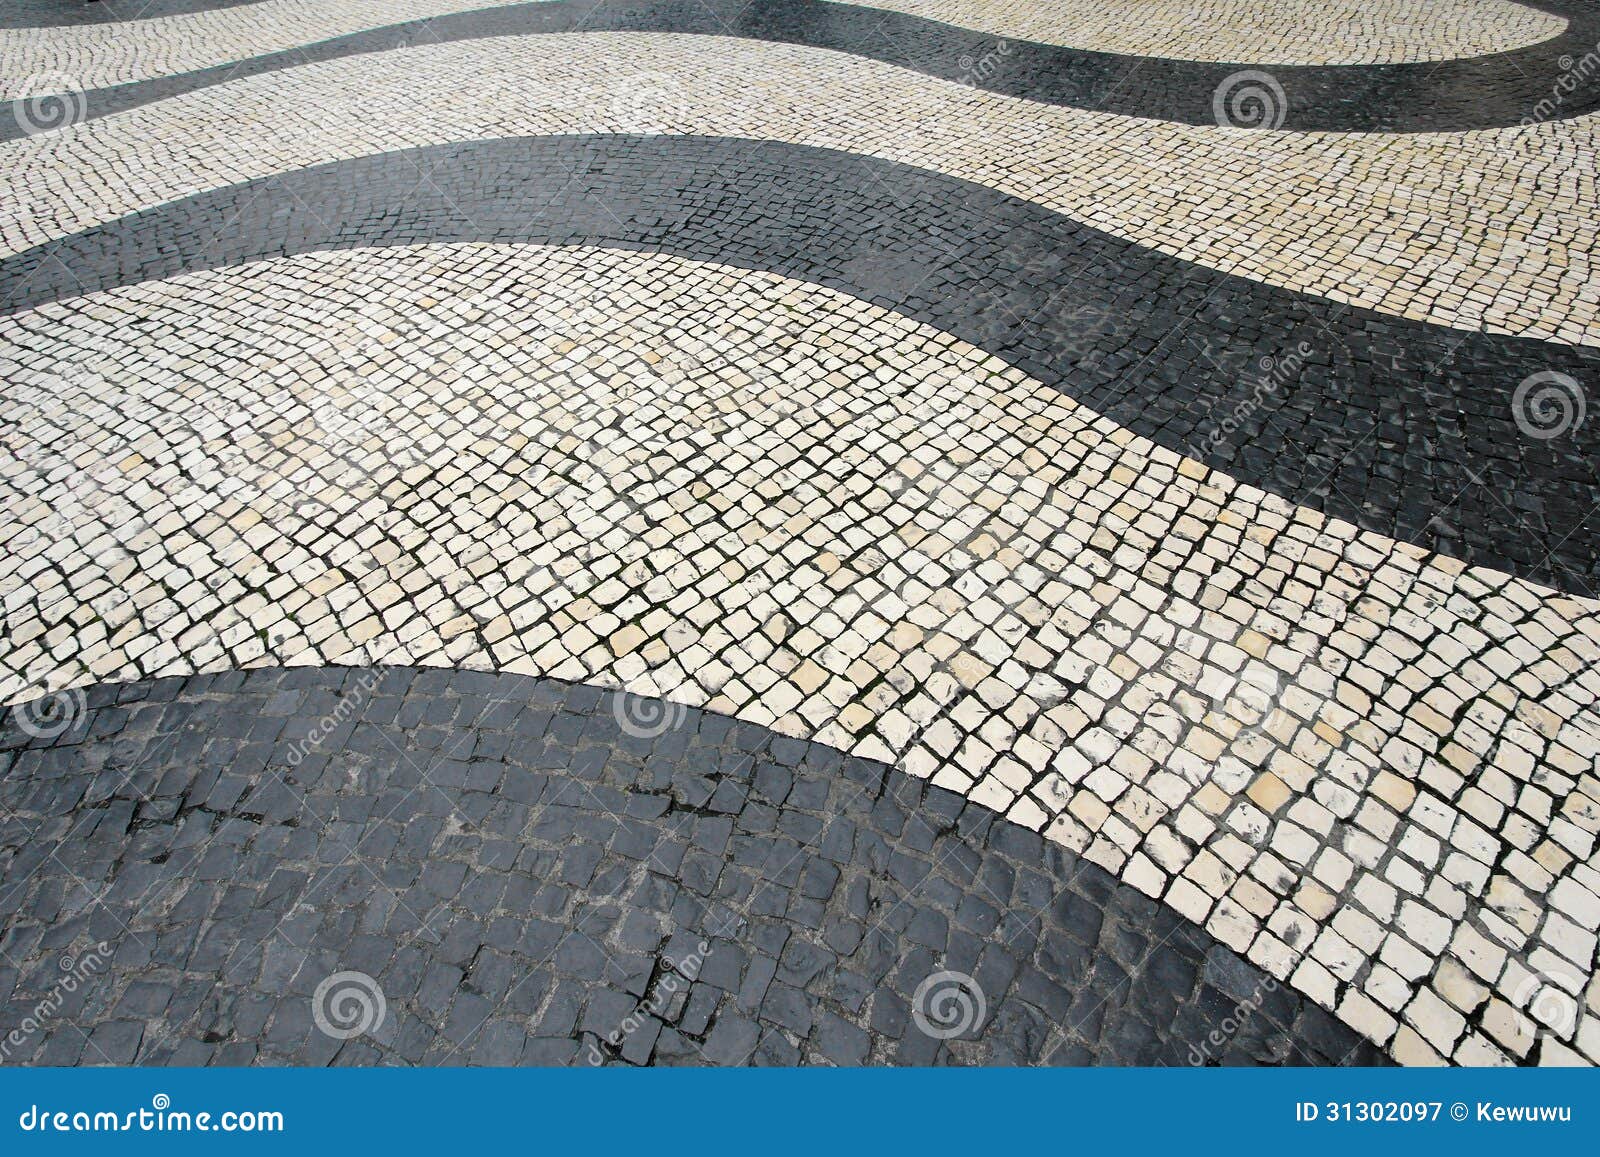 wave-motif tiles at senado square: macau